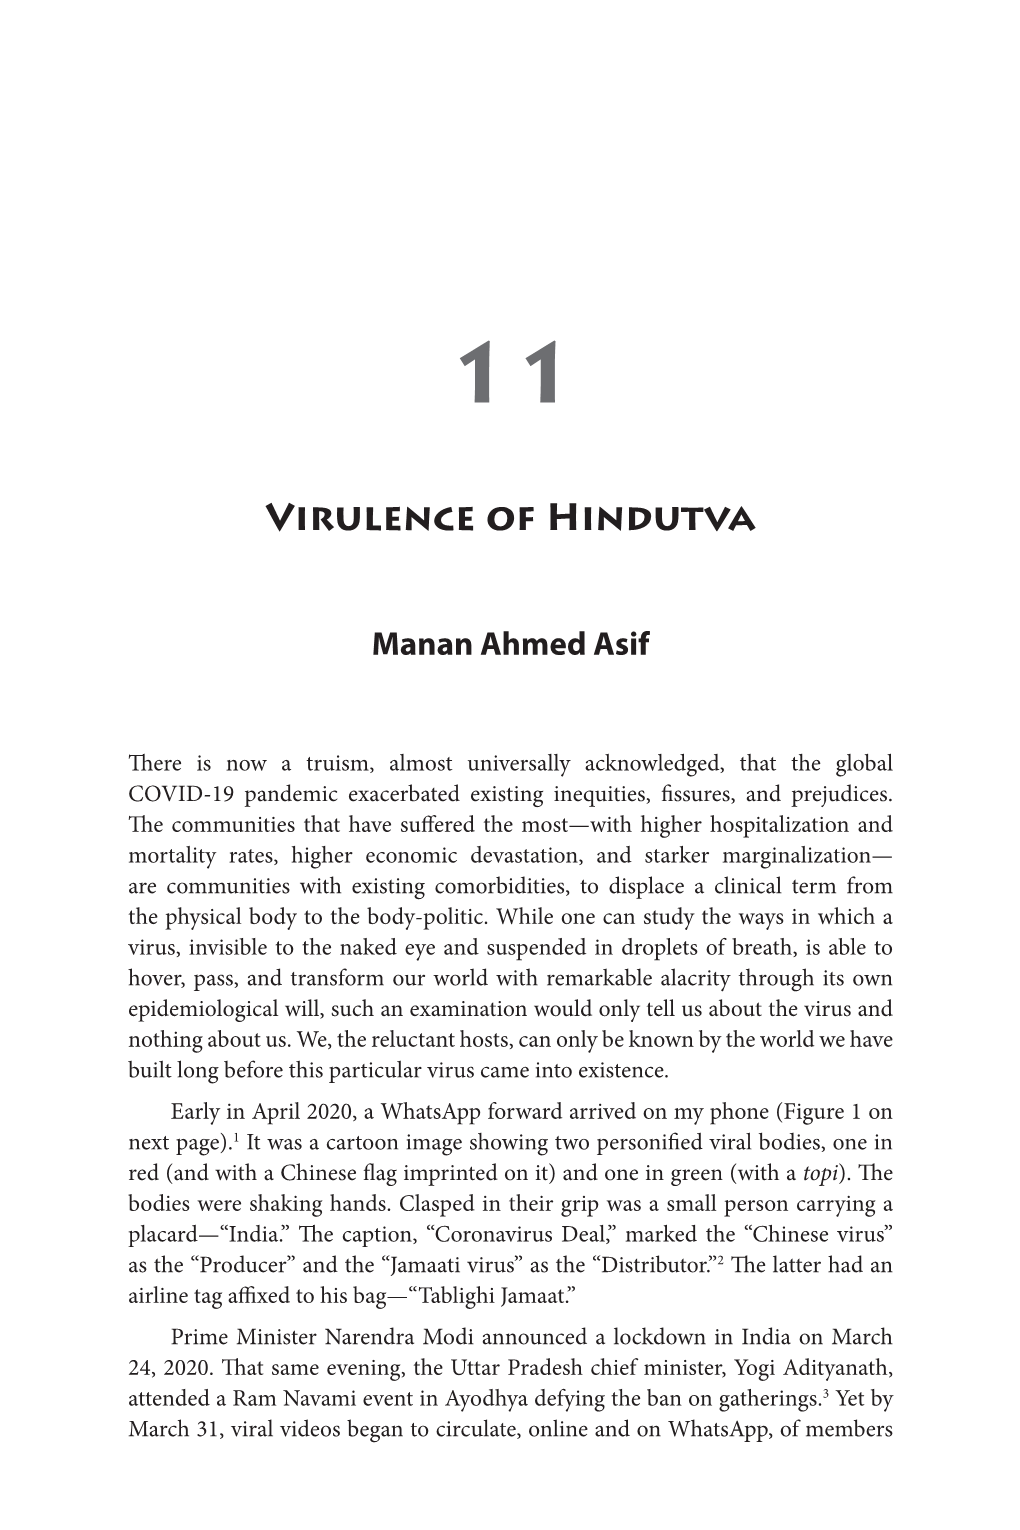 The Virulence of Hindutva — Manan Ahmed Asif